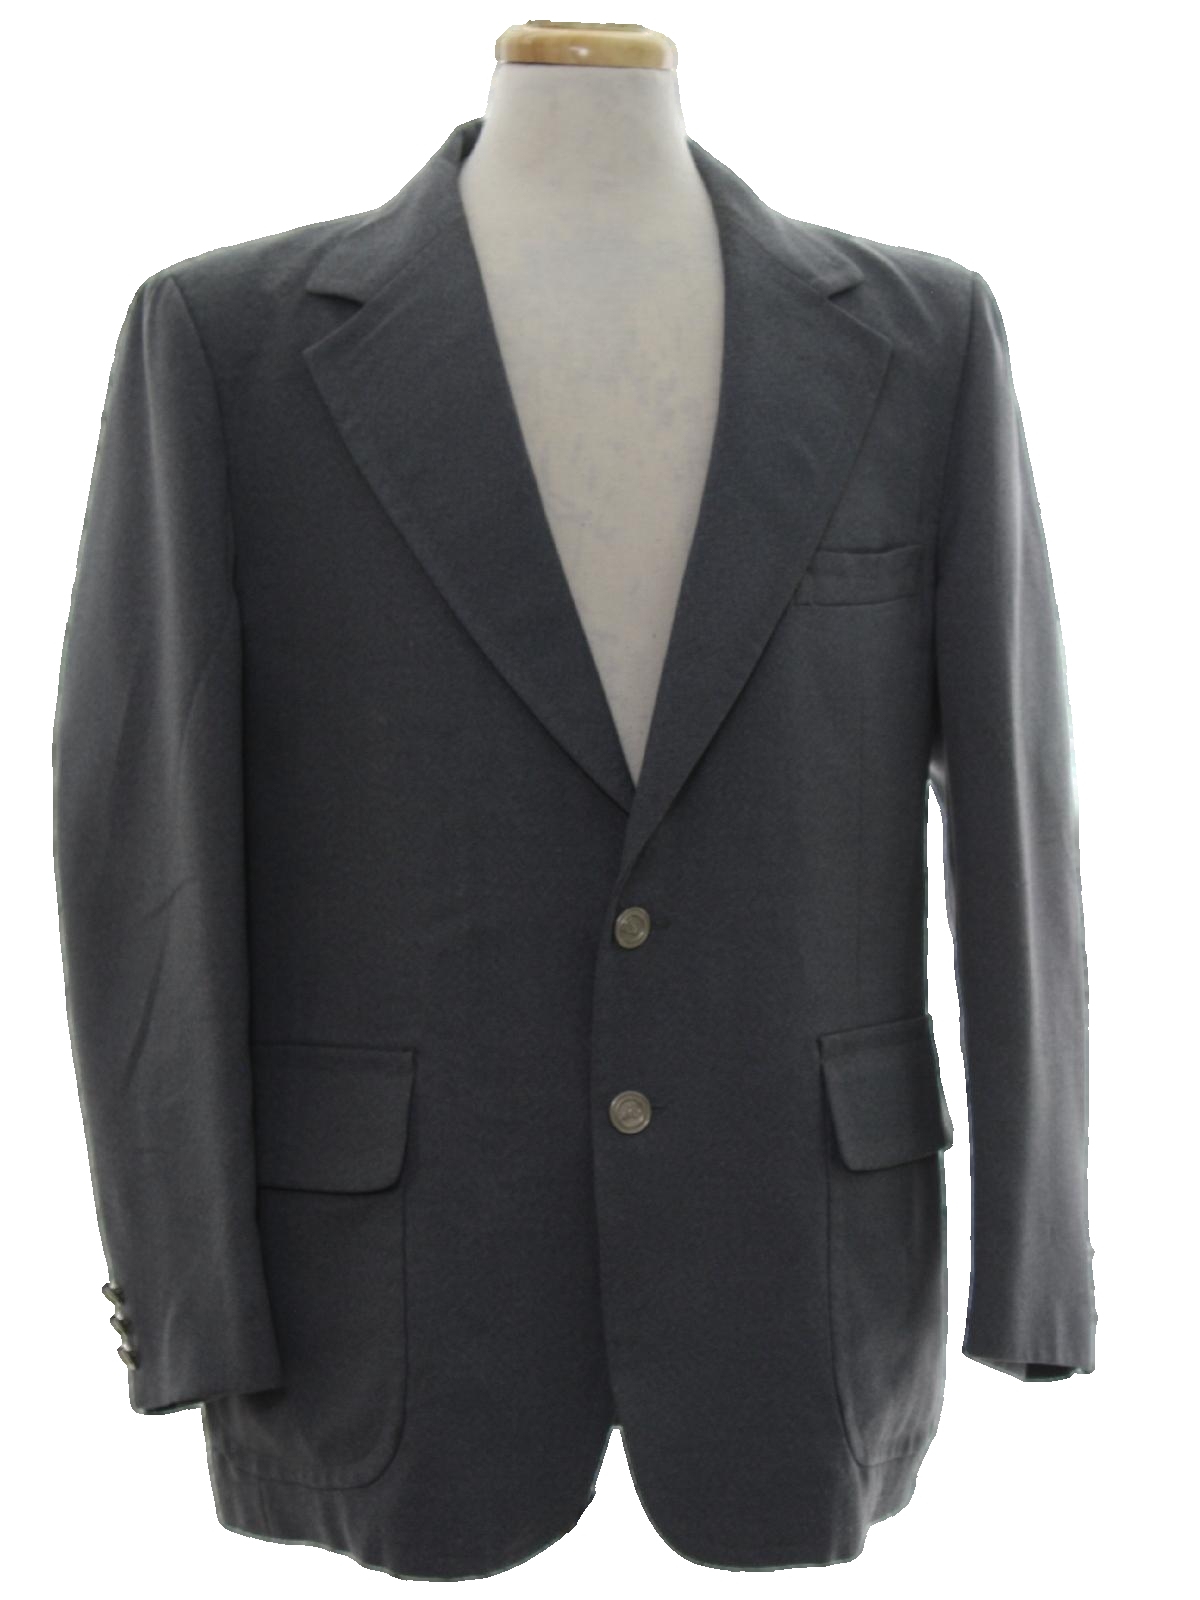 JCPenney 70's Vintage Jacket: 70s -JCPenney- Mens grey polyester jacket ...